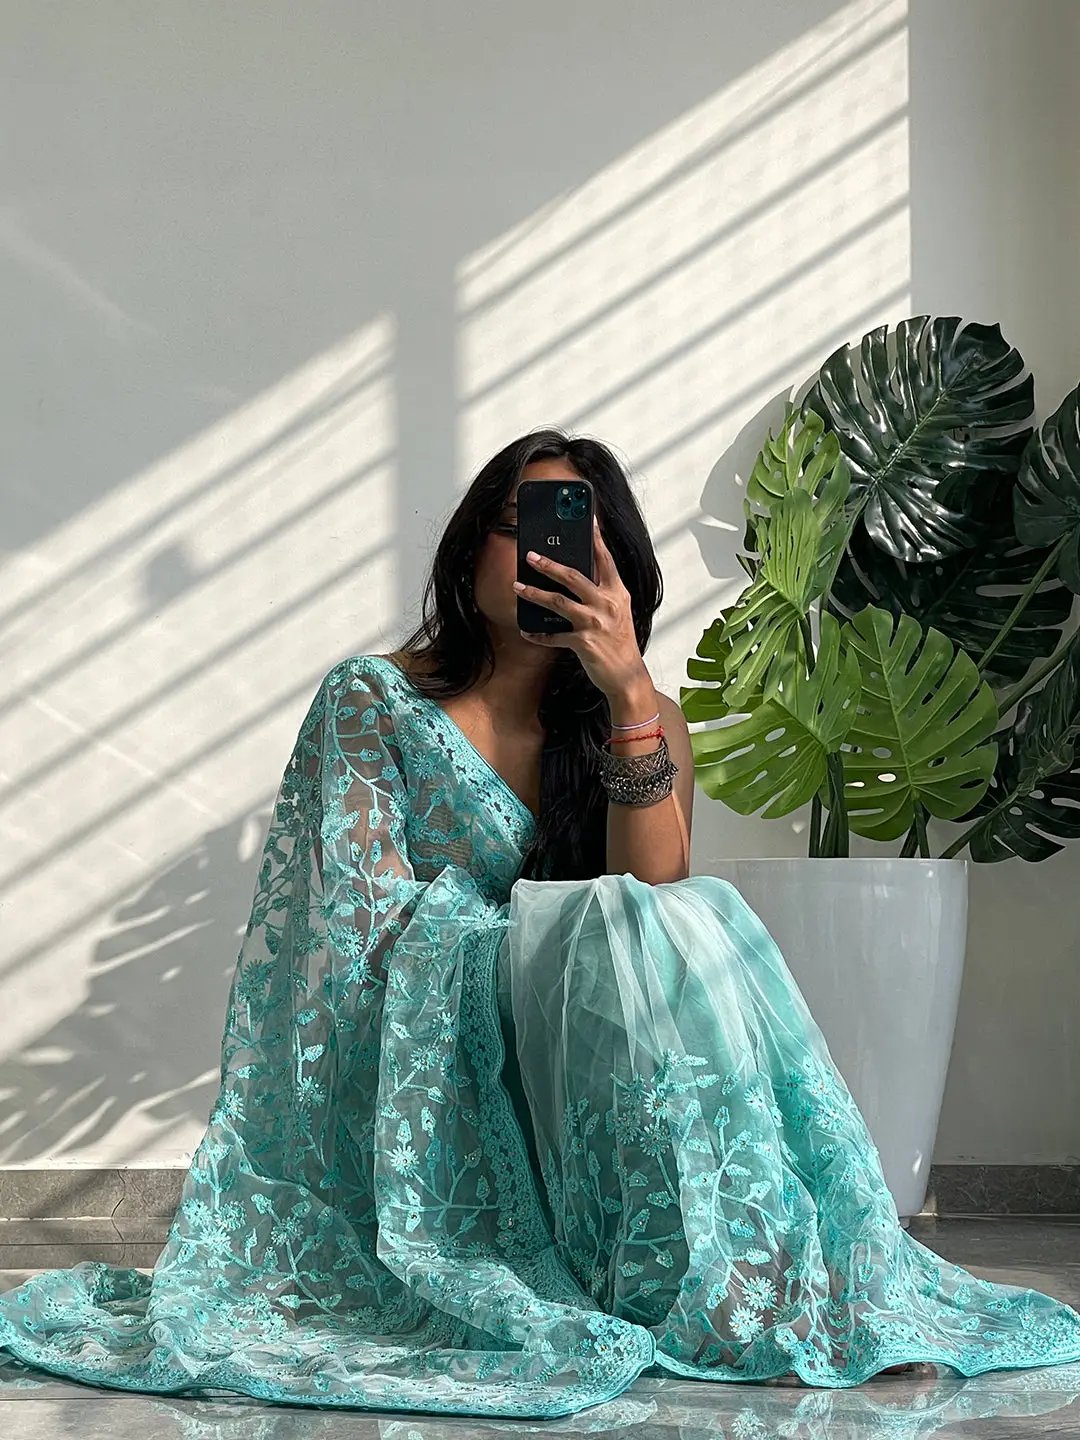 Stylish Exclusive Elegant Saree with Ethnic Motifs 